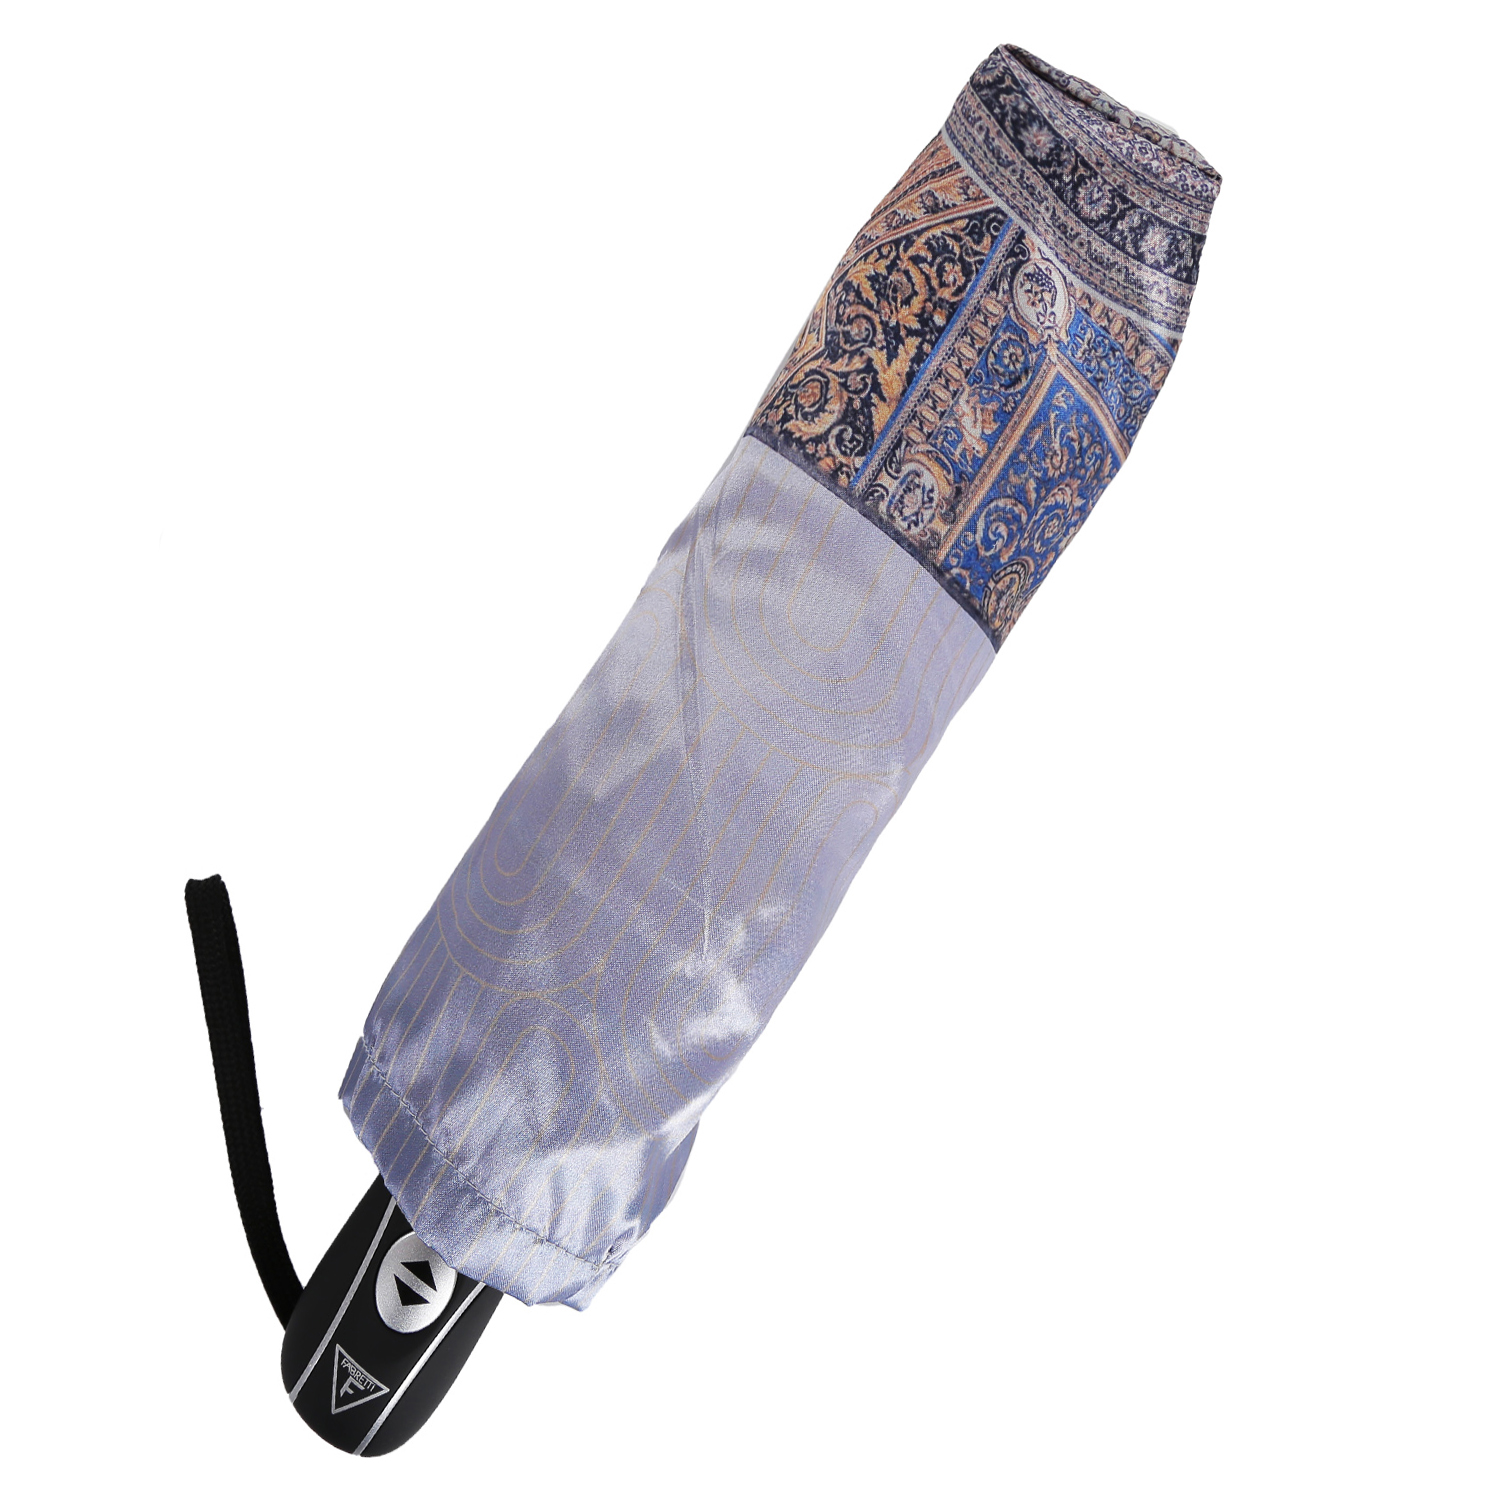 Зонт складной женский автоматический FABRETTI S-20139 голубой